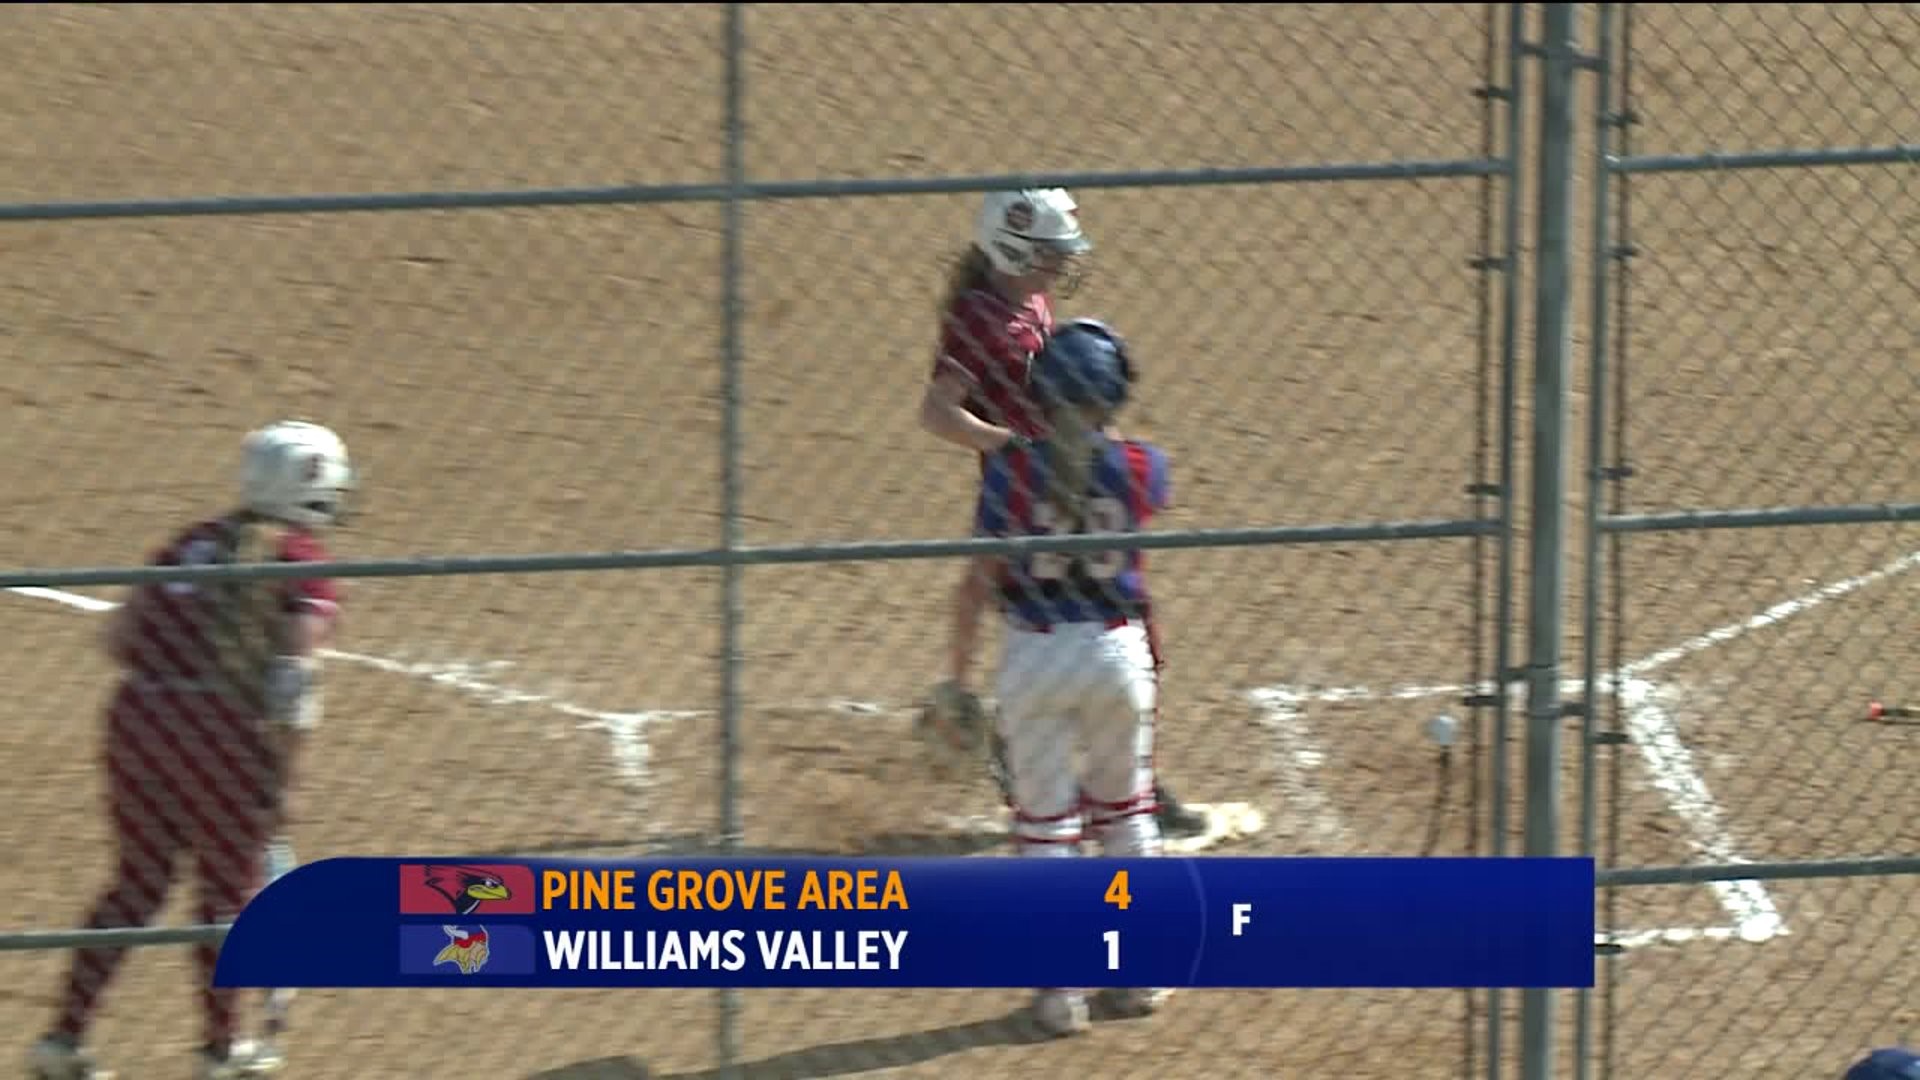 Pine Grove vs WIlliams Valley softball